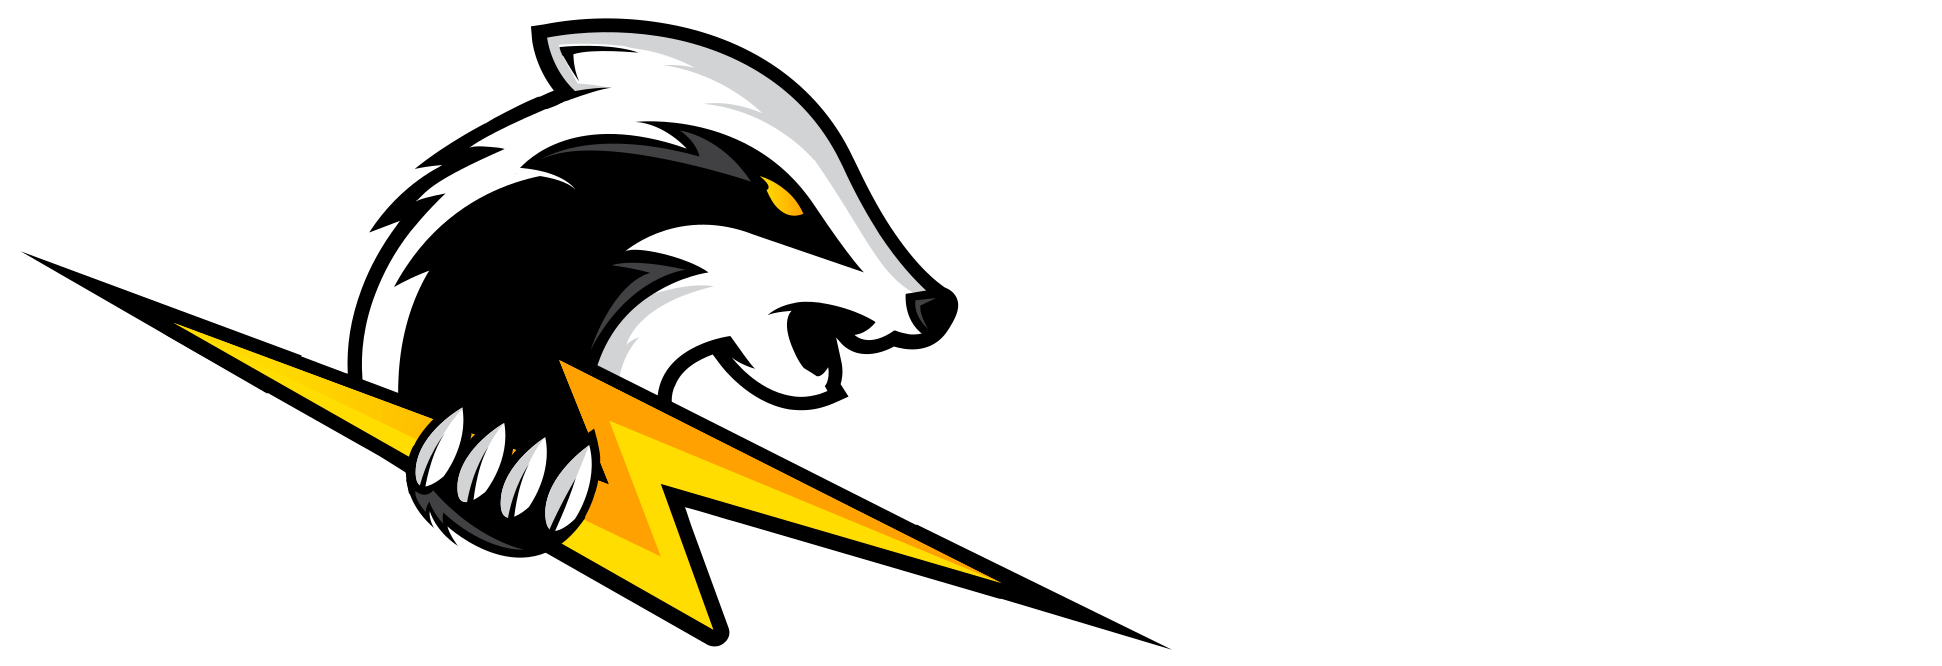 Nift badger mascot with black text